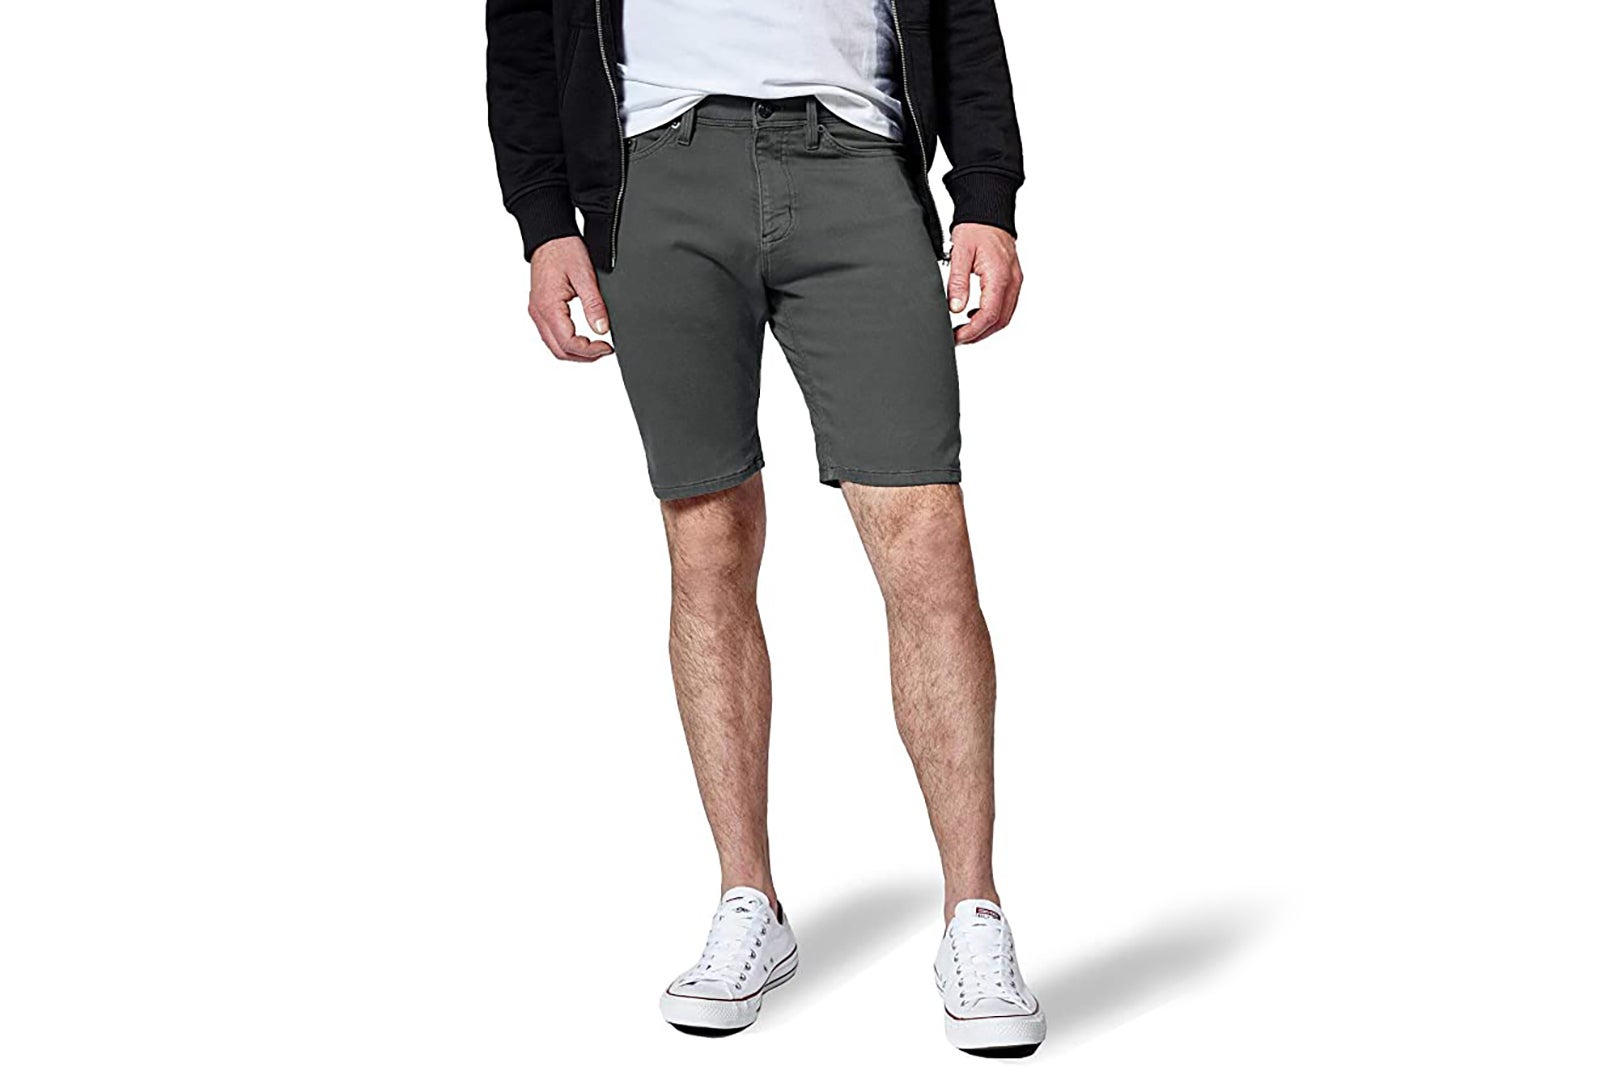 Shorts from Amazon